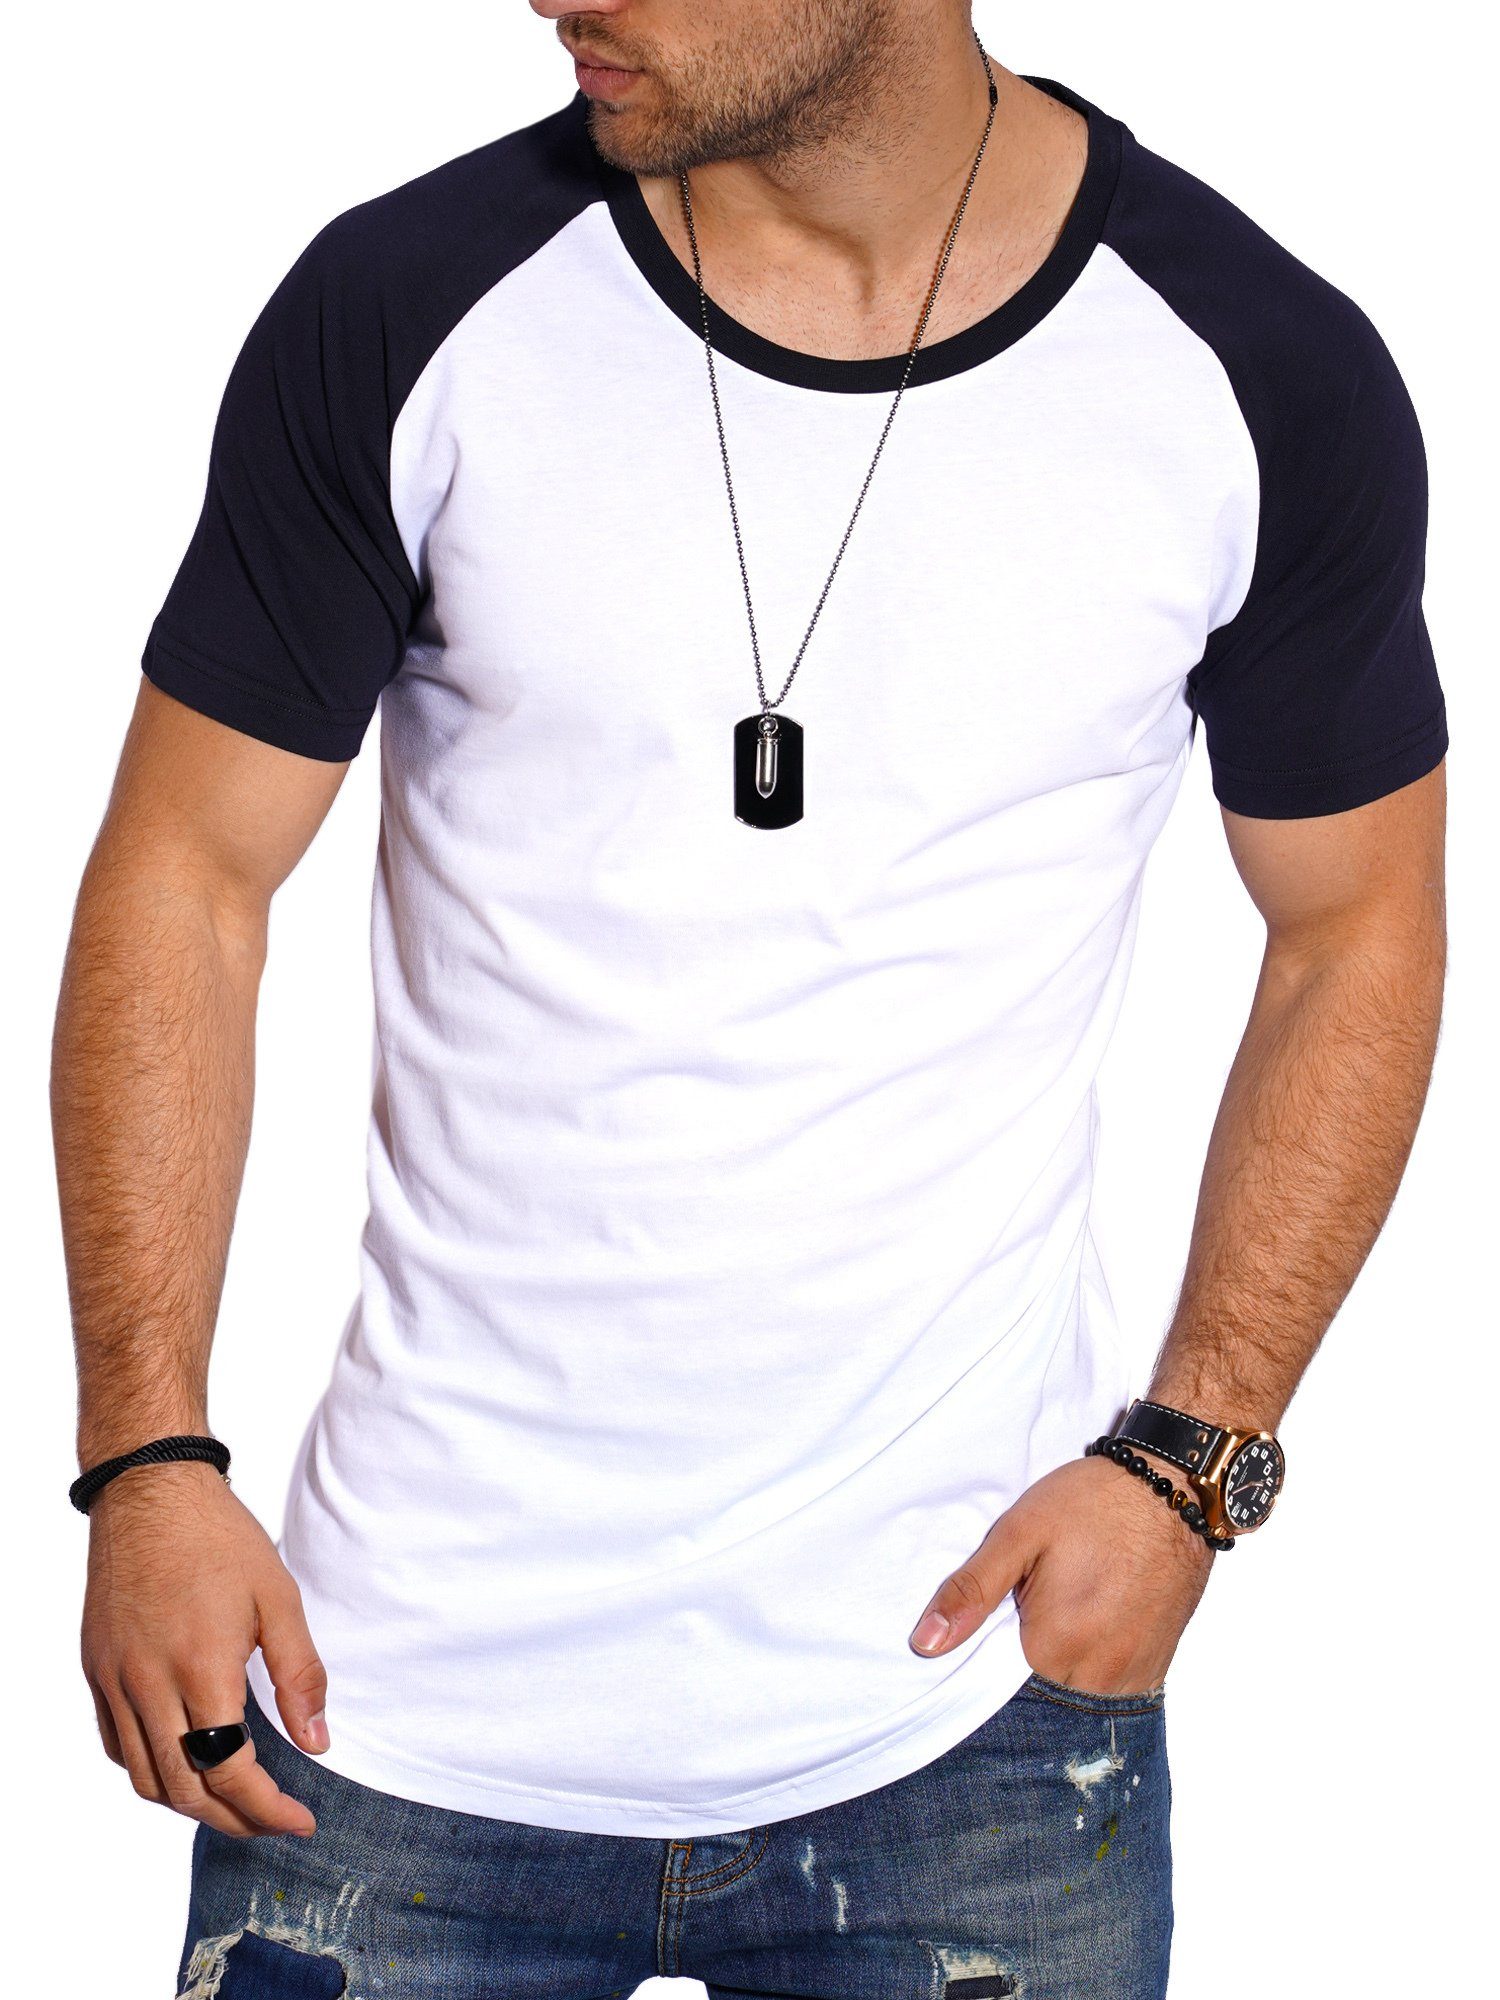 Raglan-Stil im Weiß-Navy T-Shirt Basic SDBOISE Style-Division